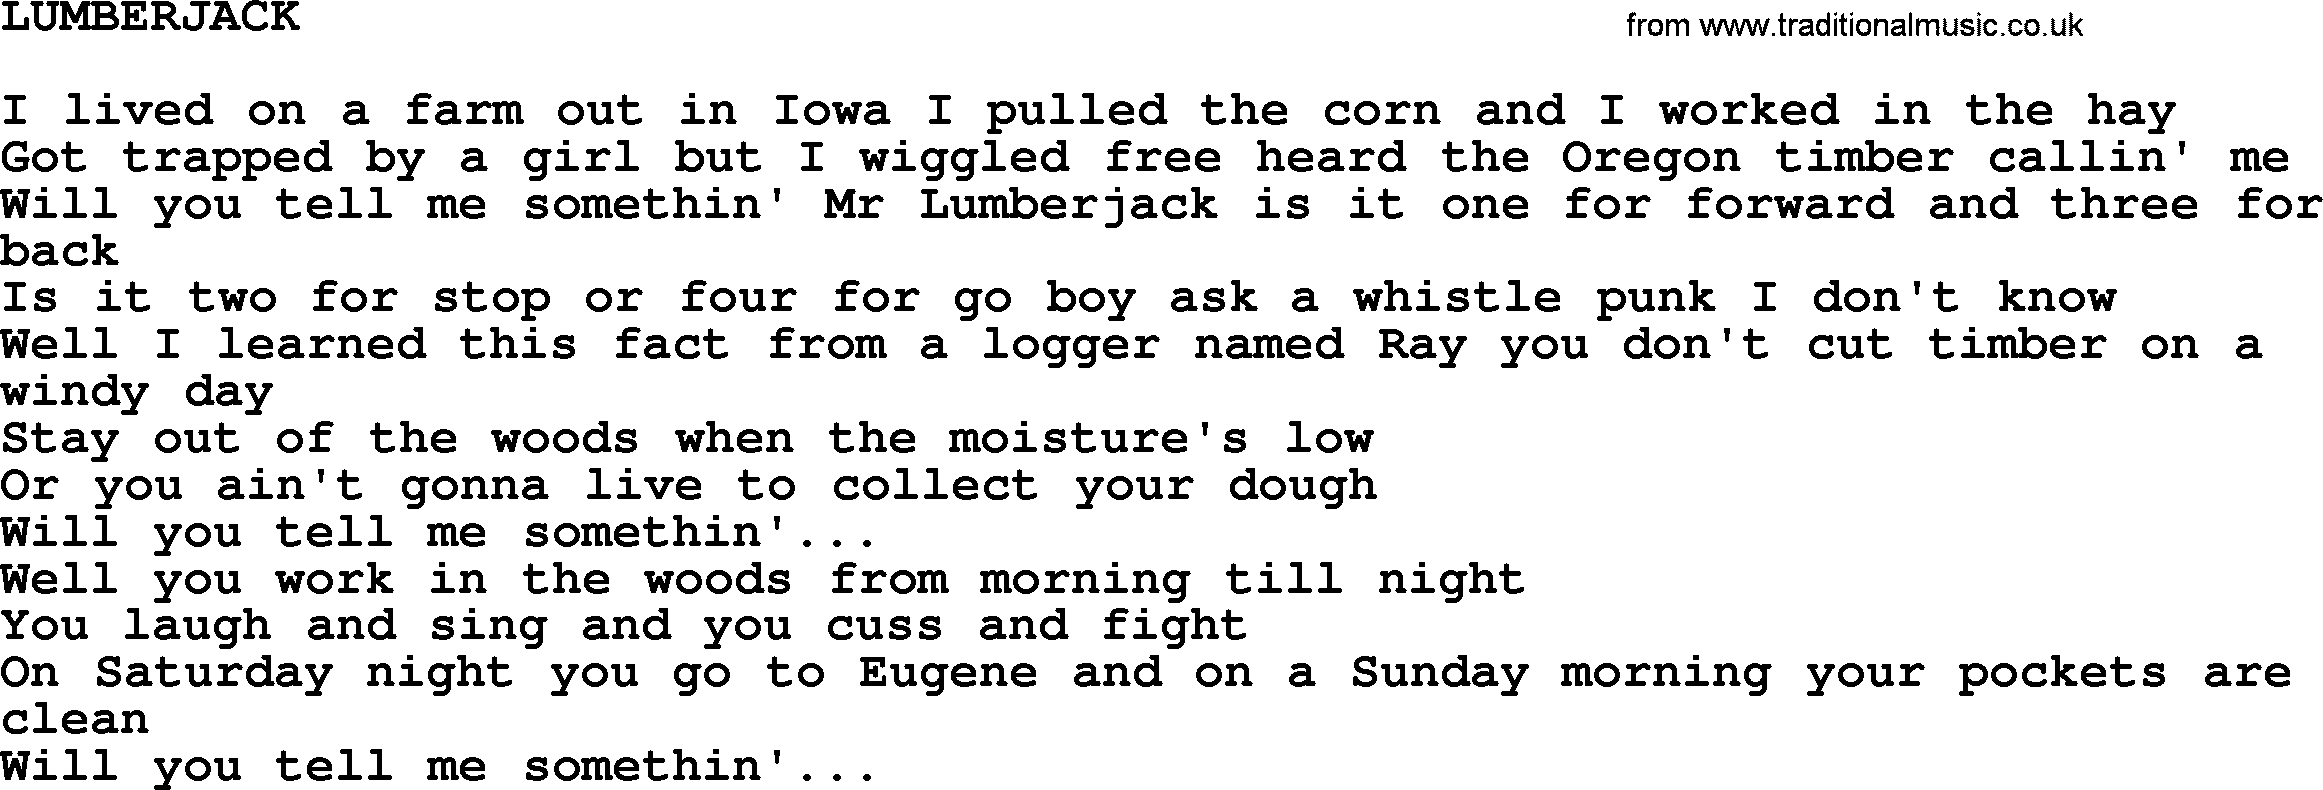 Johnny Cash song Lumberjack.txt lyrics